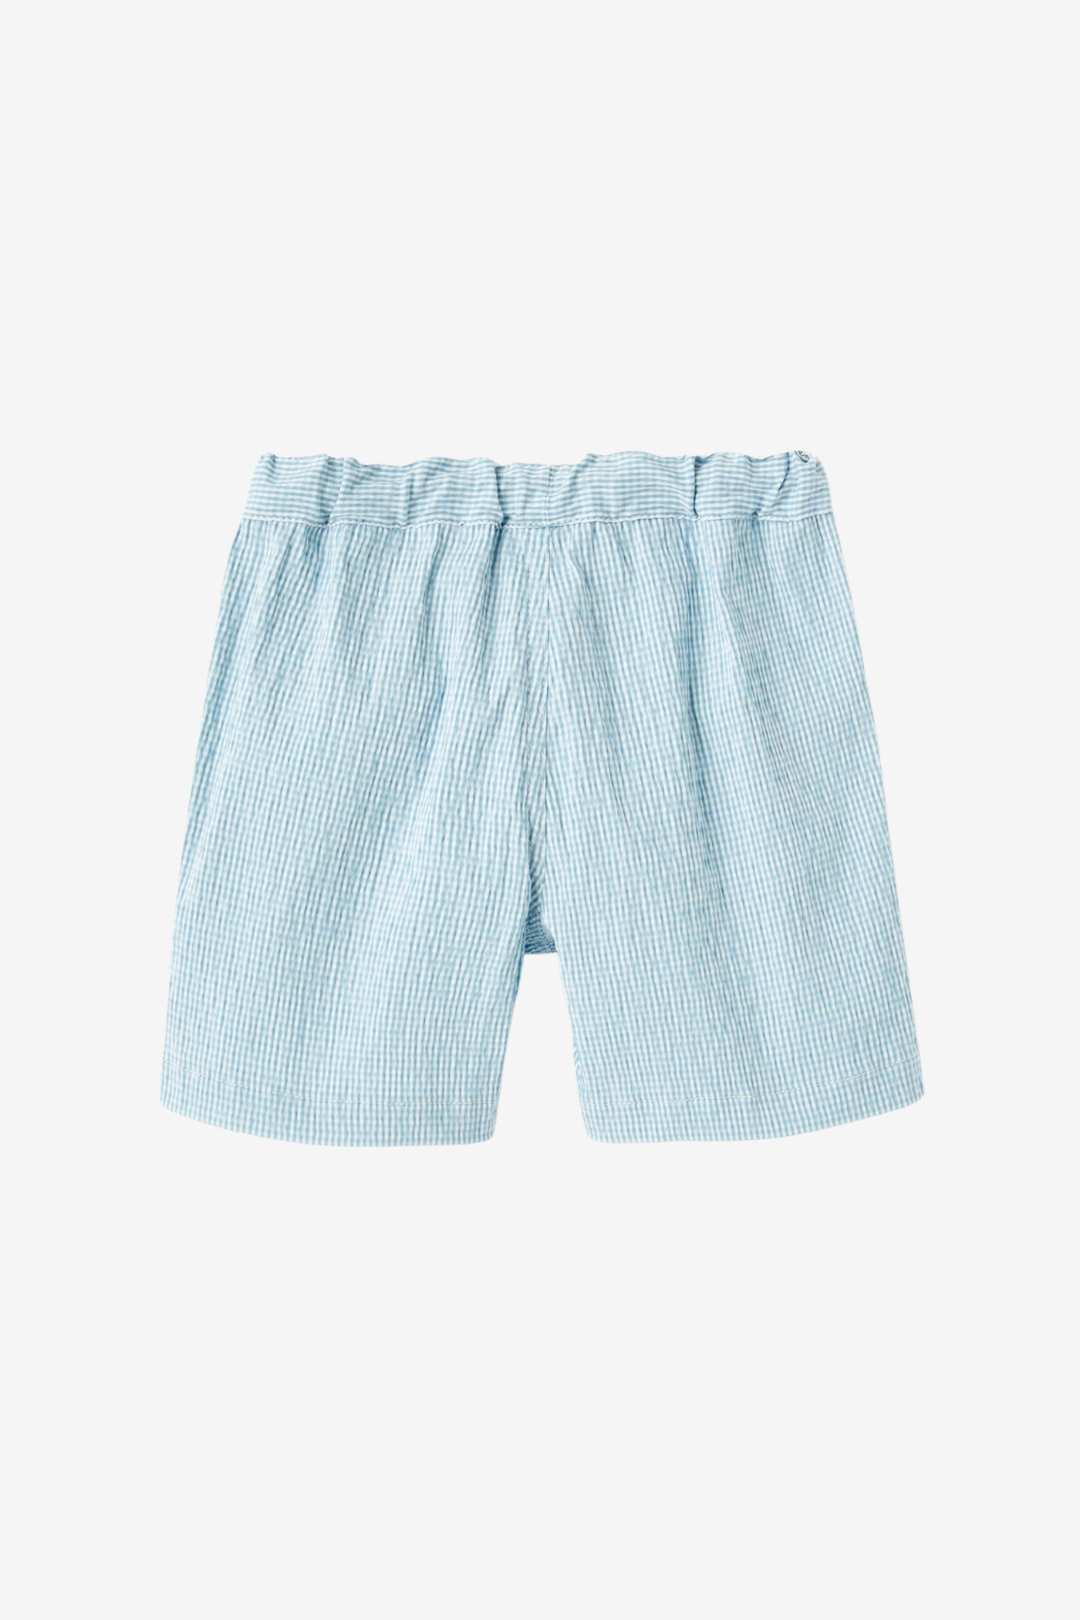 Hellblaue Mikro-Vichy-Shorts